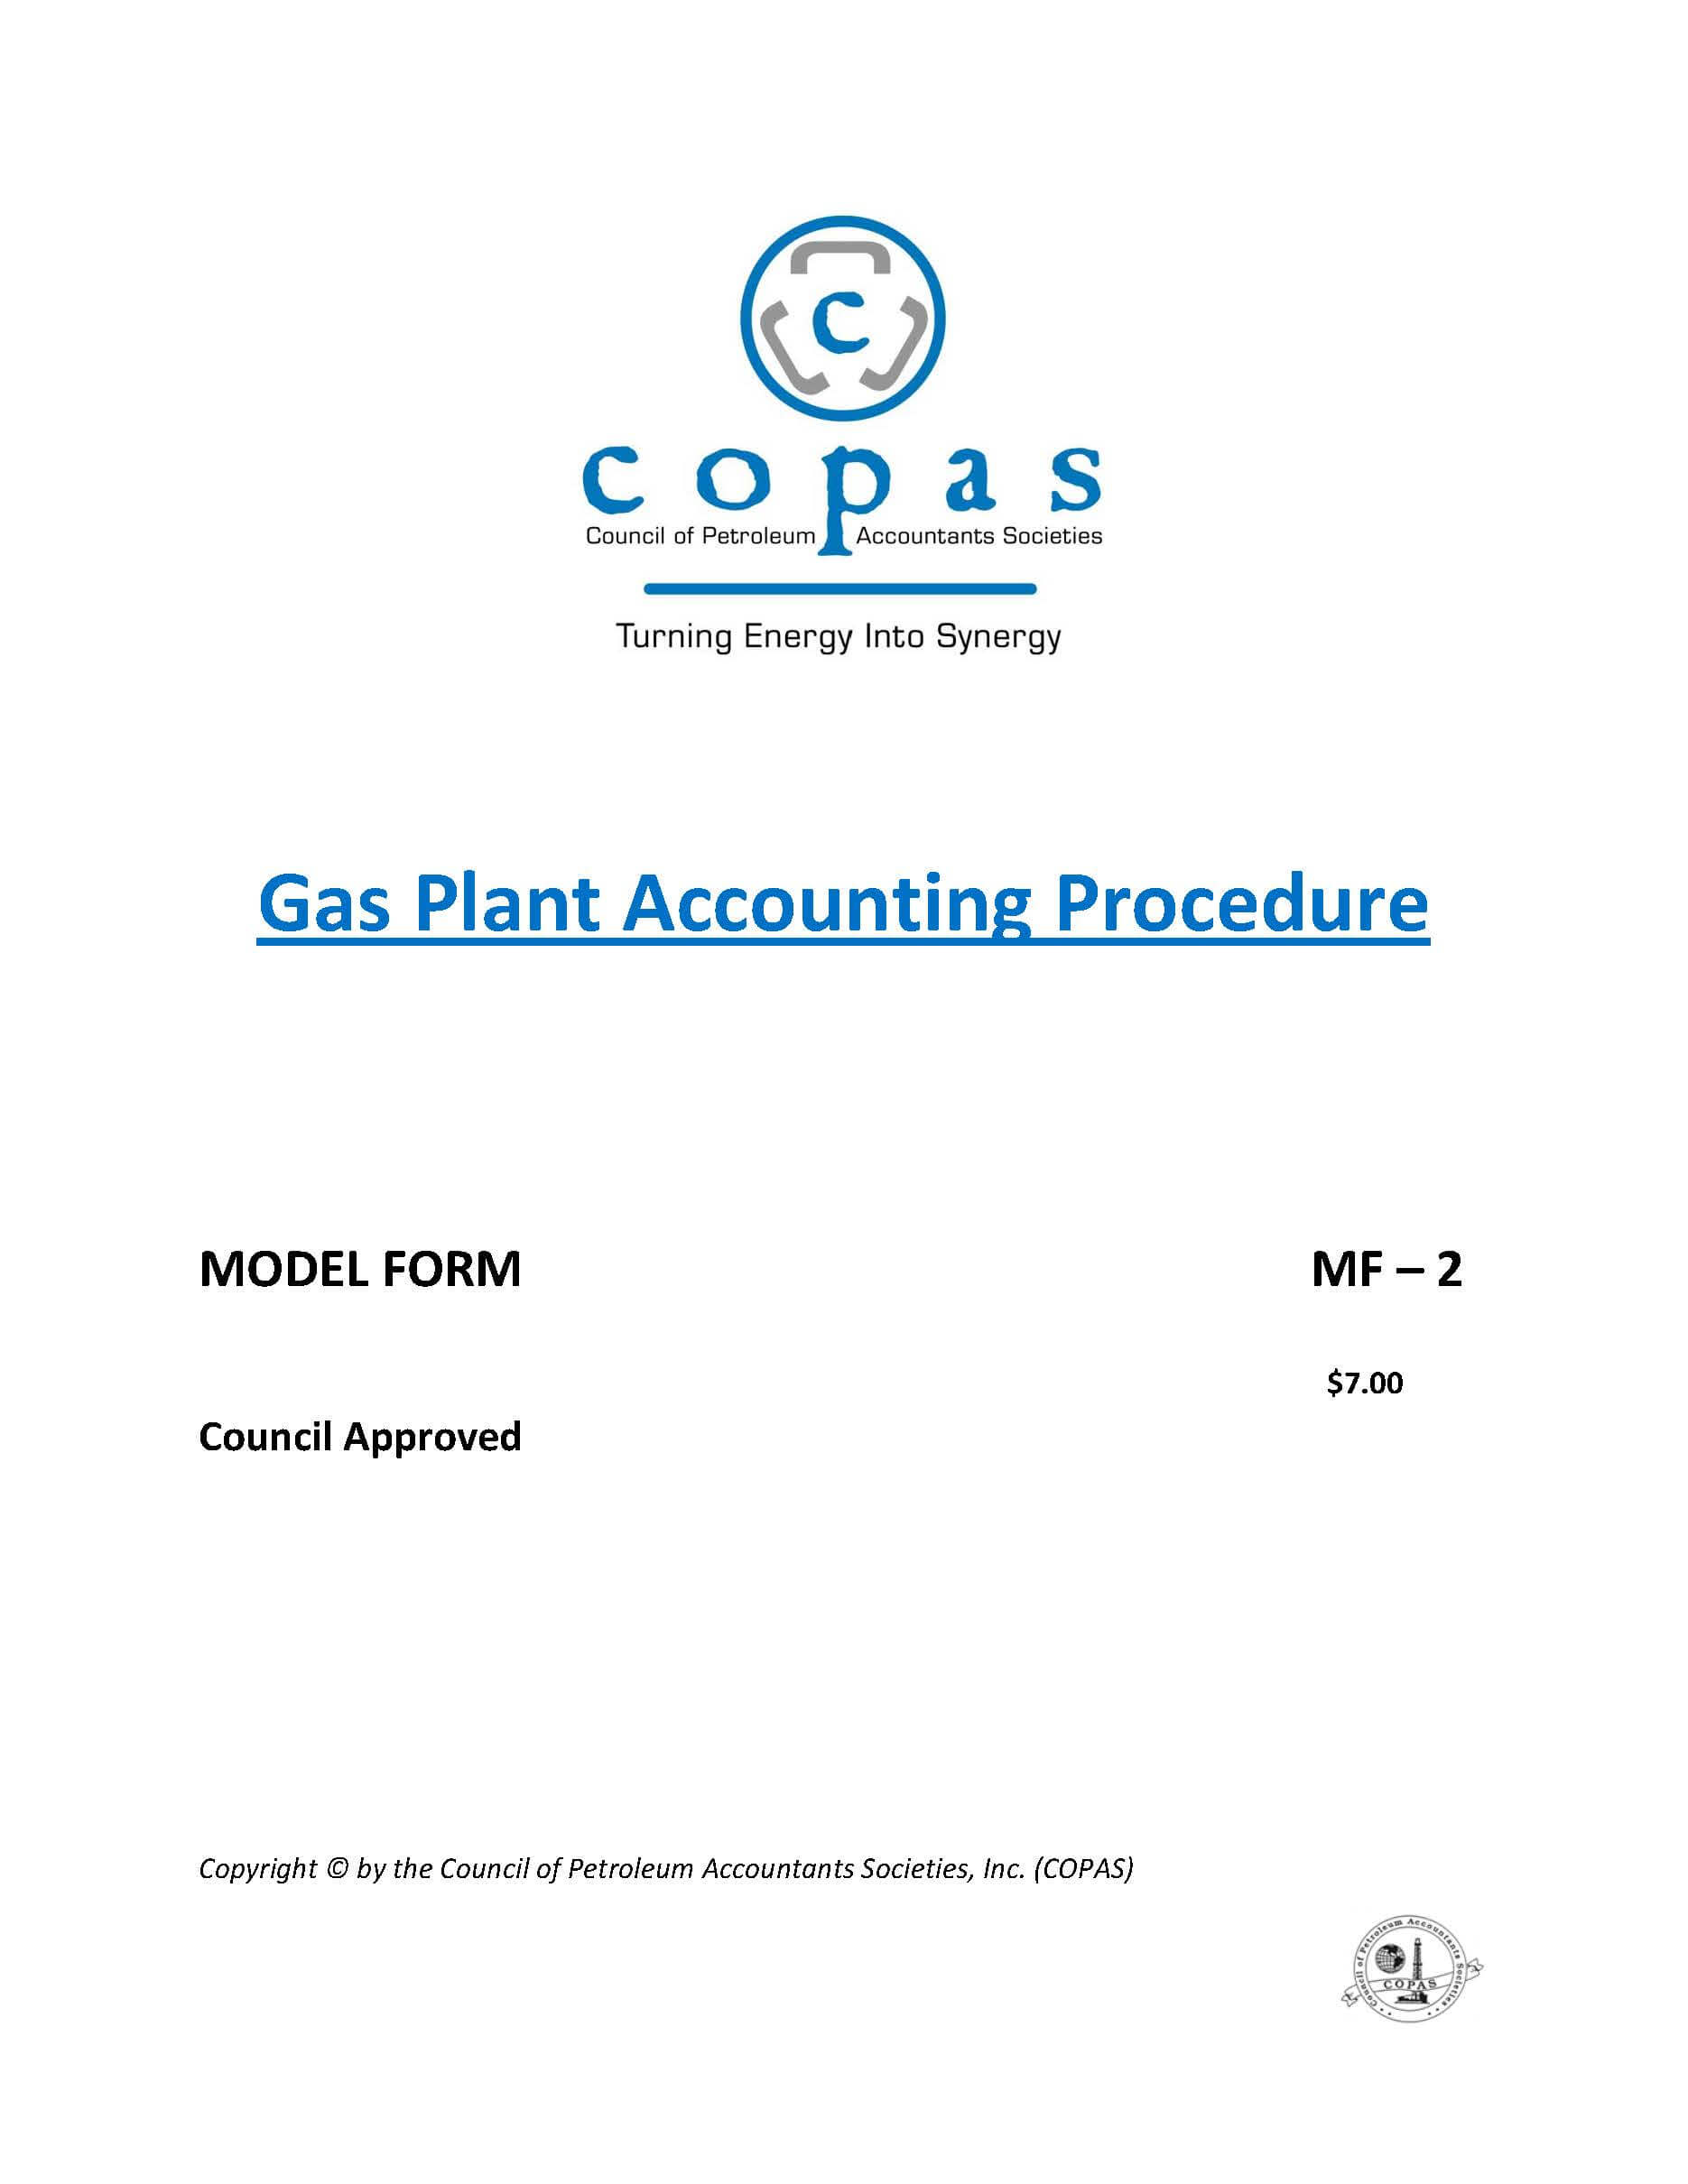 MFI-2 1968 Model Form Accounting Procedure Intepretation - products MF 2 Gas Plant Accounting Procedure1 - Council of Petroleum Accountants Societies